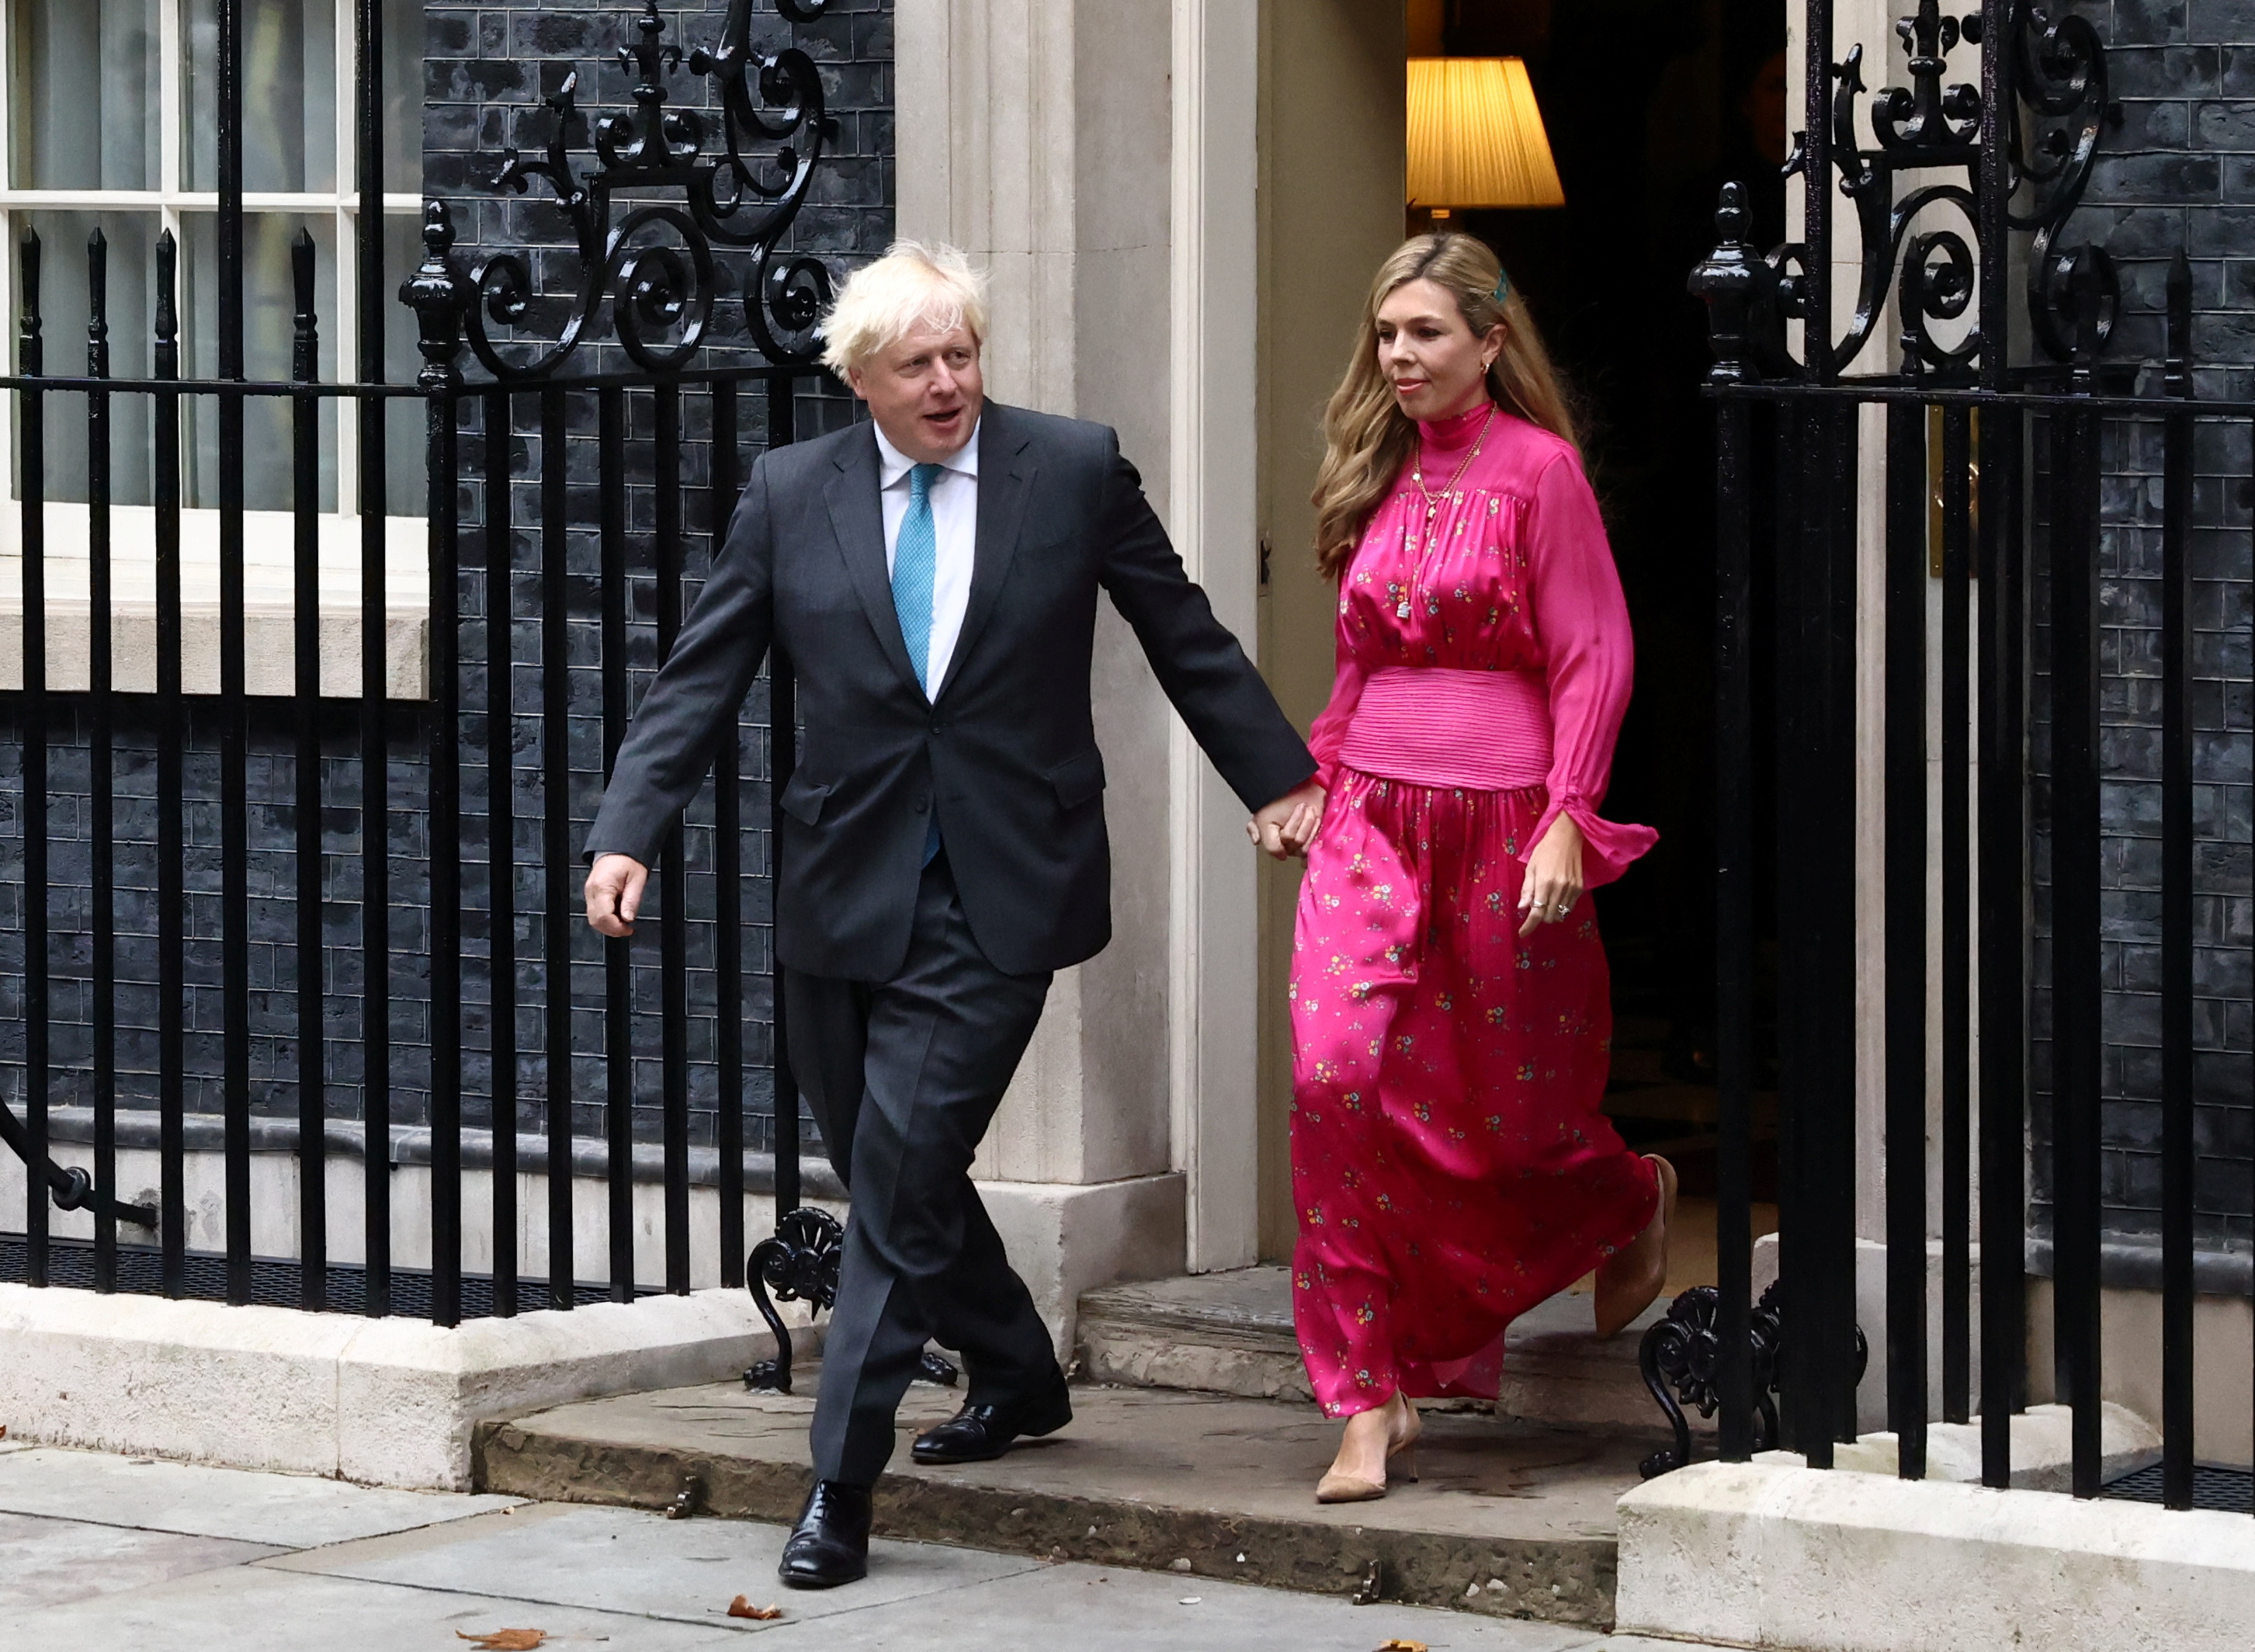 Boris Johnson said goodbye with his wife Carrie Johnson